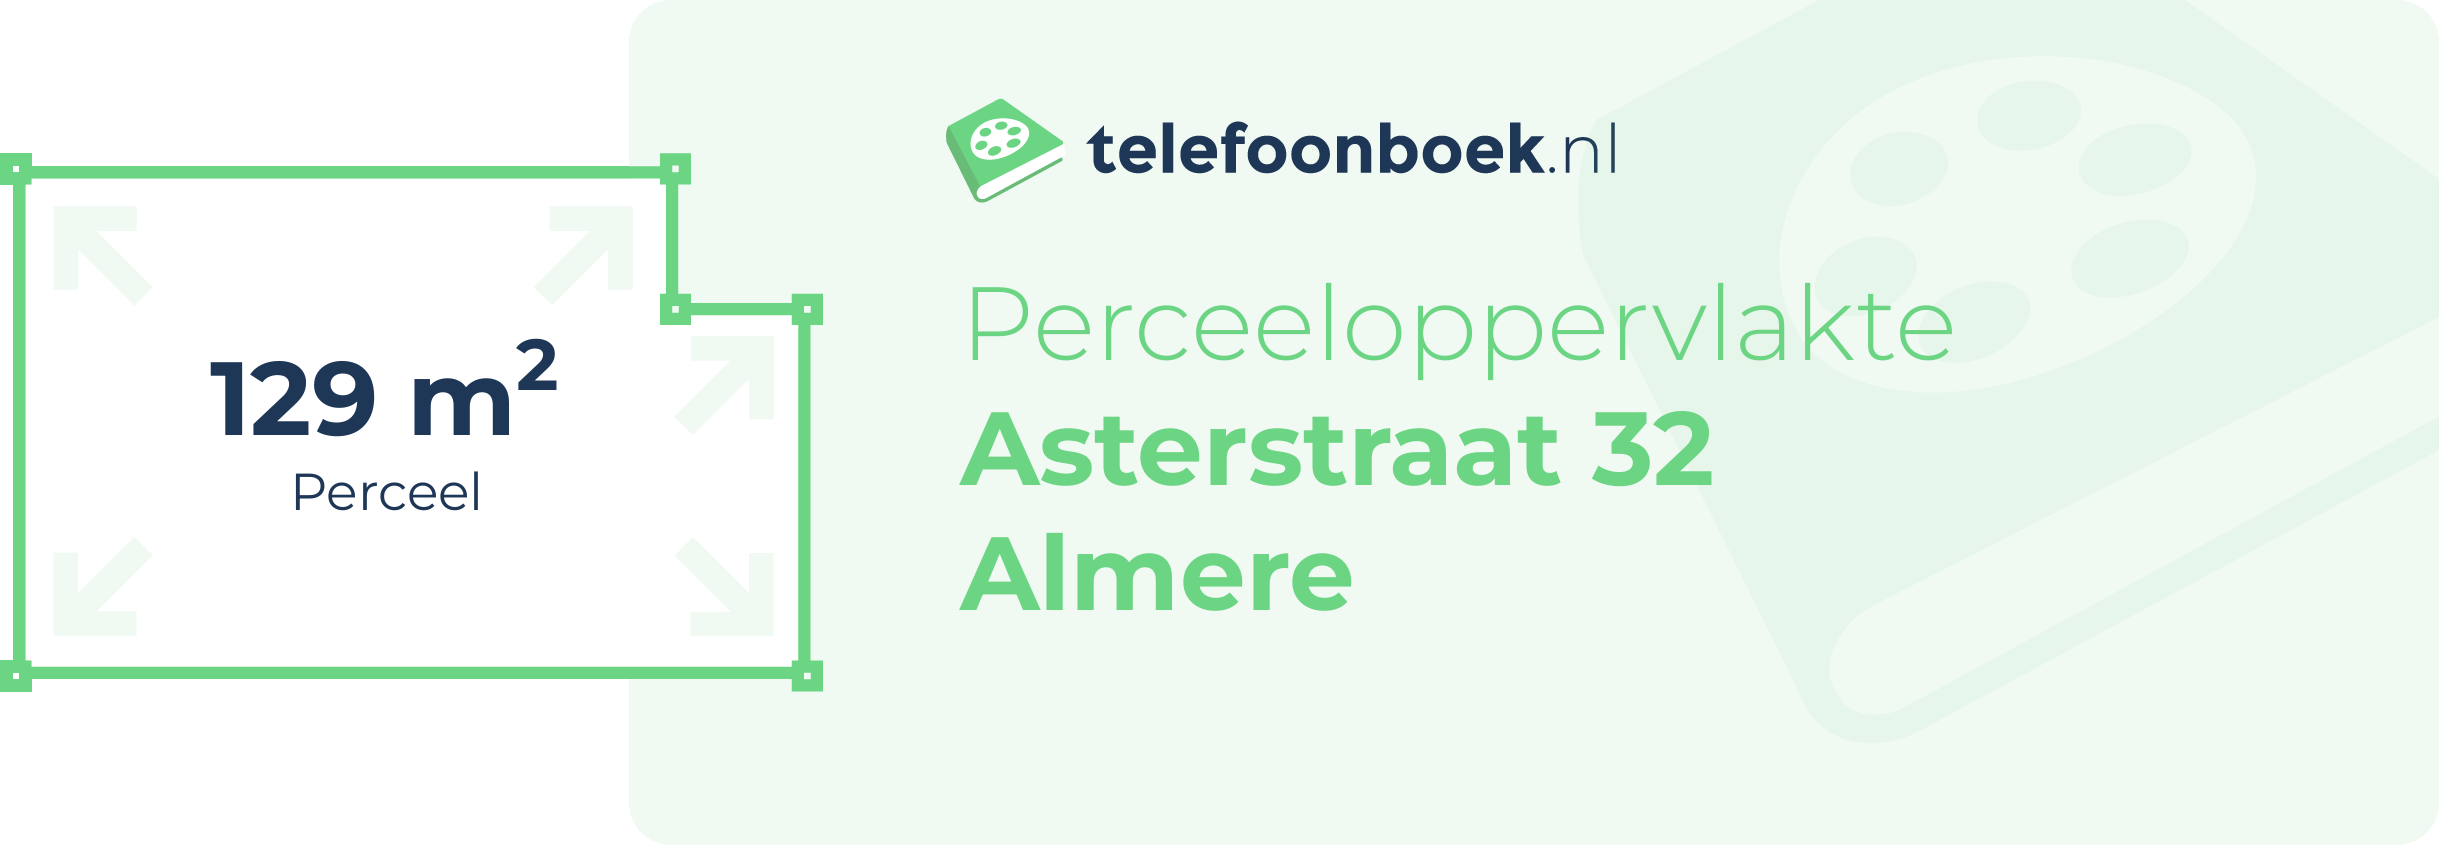 Perceeloppervlakte Asterstraat 32 Almere